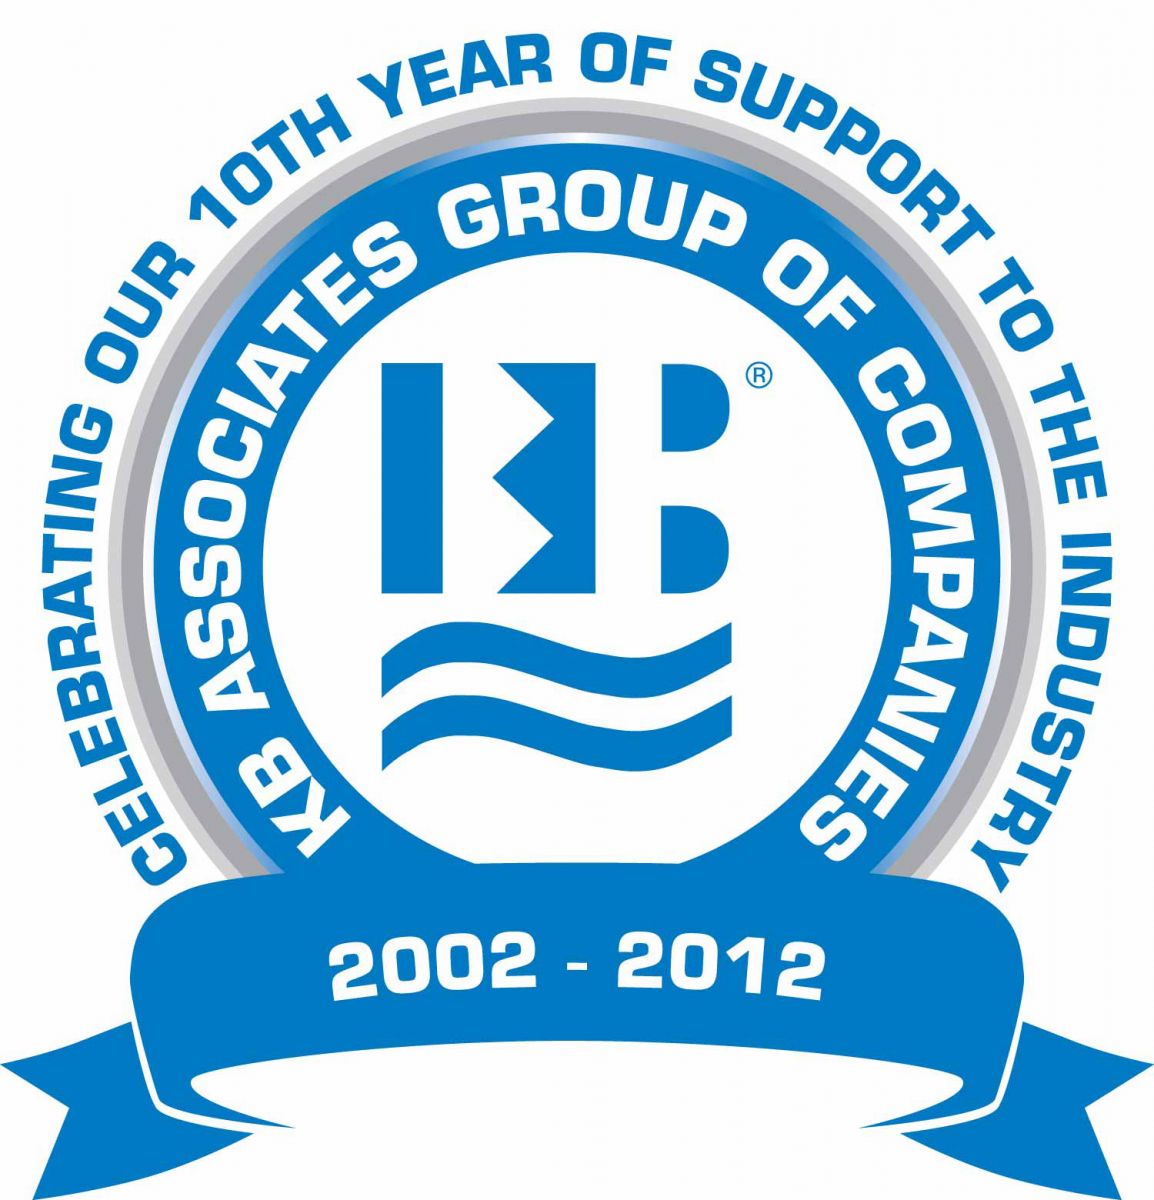 KB ASSOCIATES GROUP CELEBRATES 10th Year Anniversary 